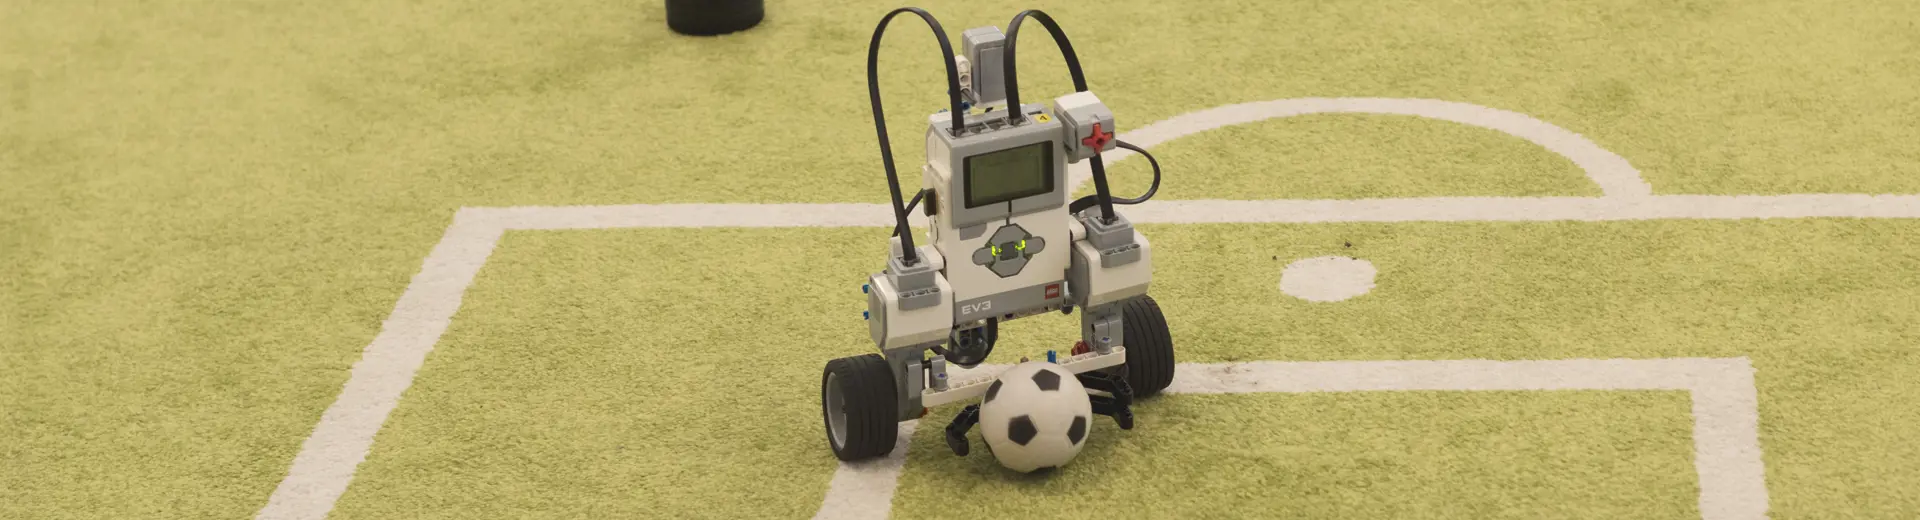 Small robot playing football on miniature football pitch